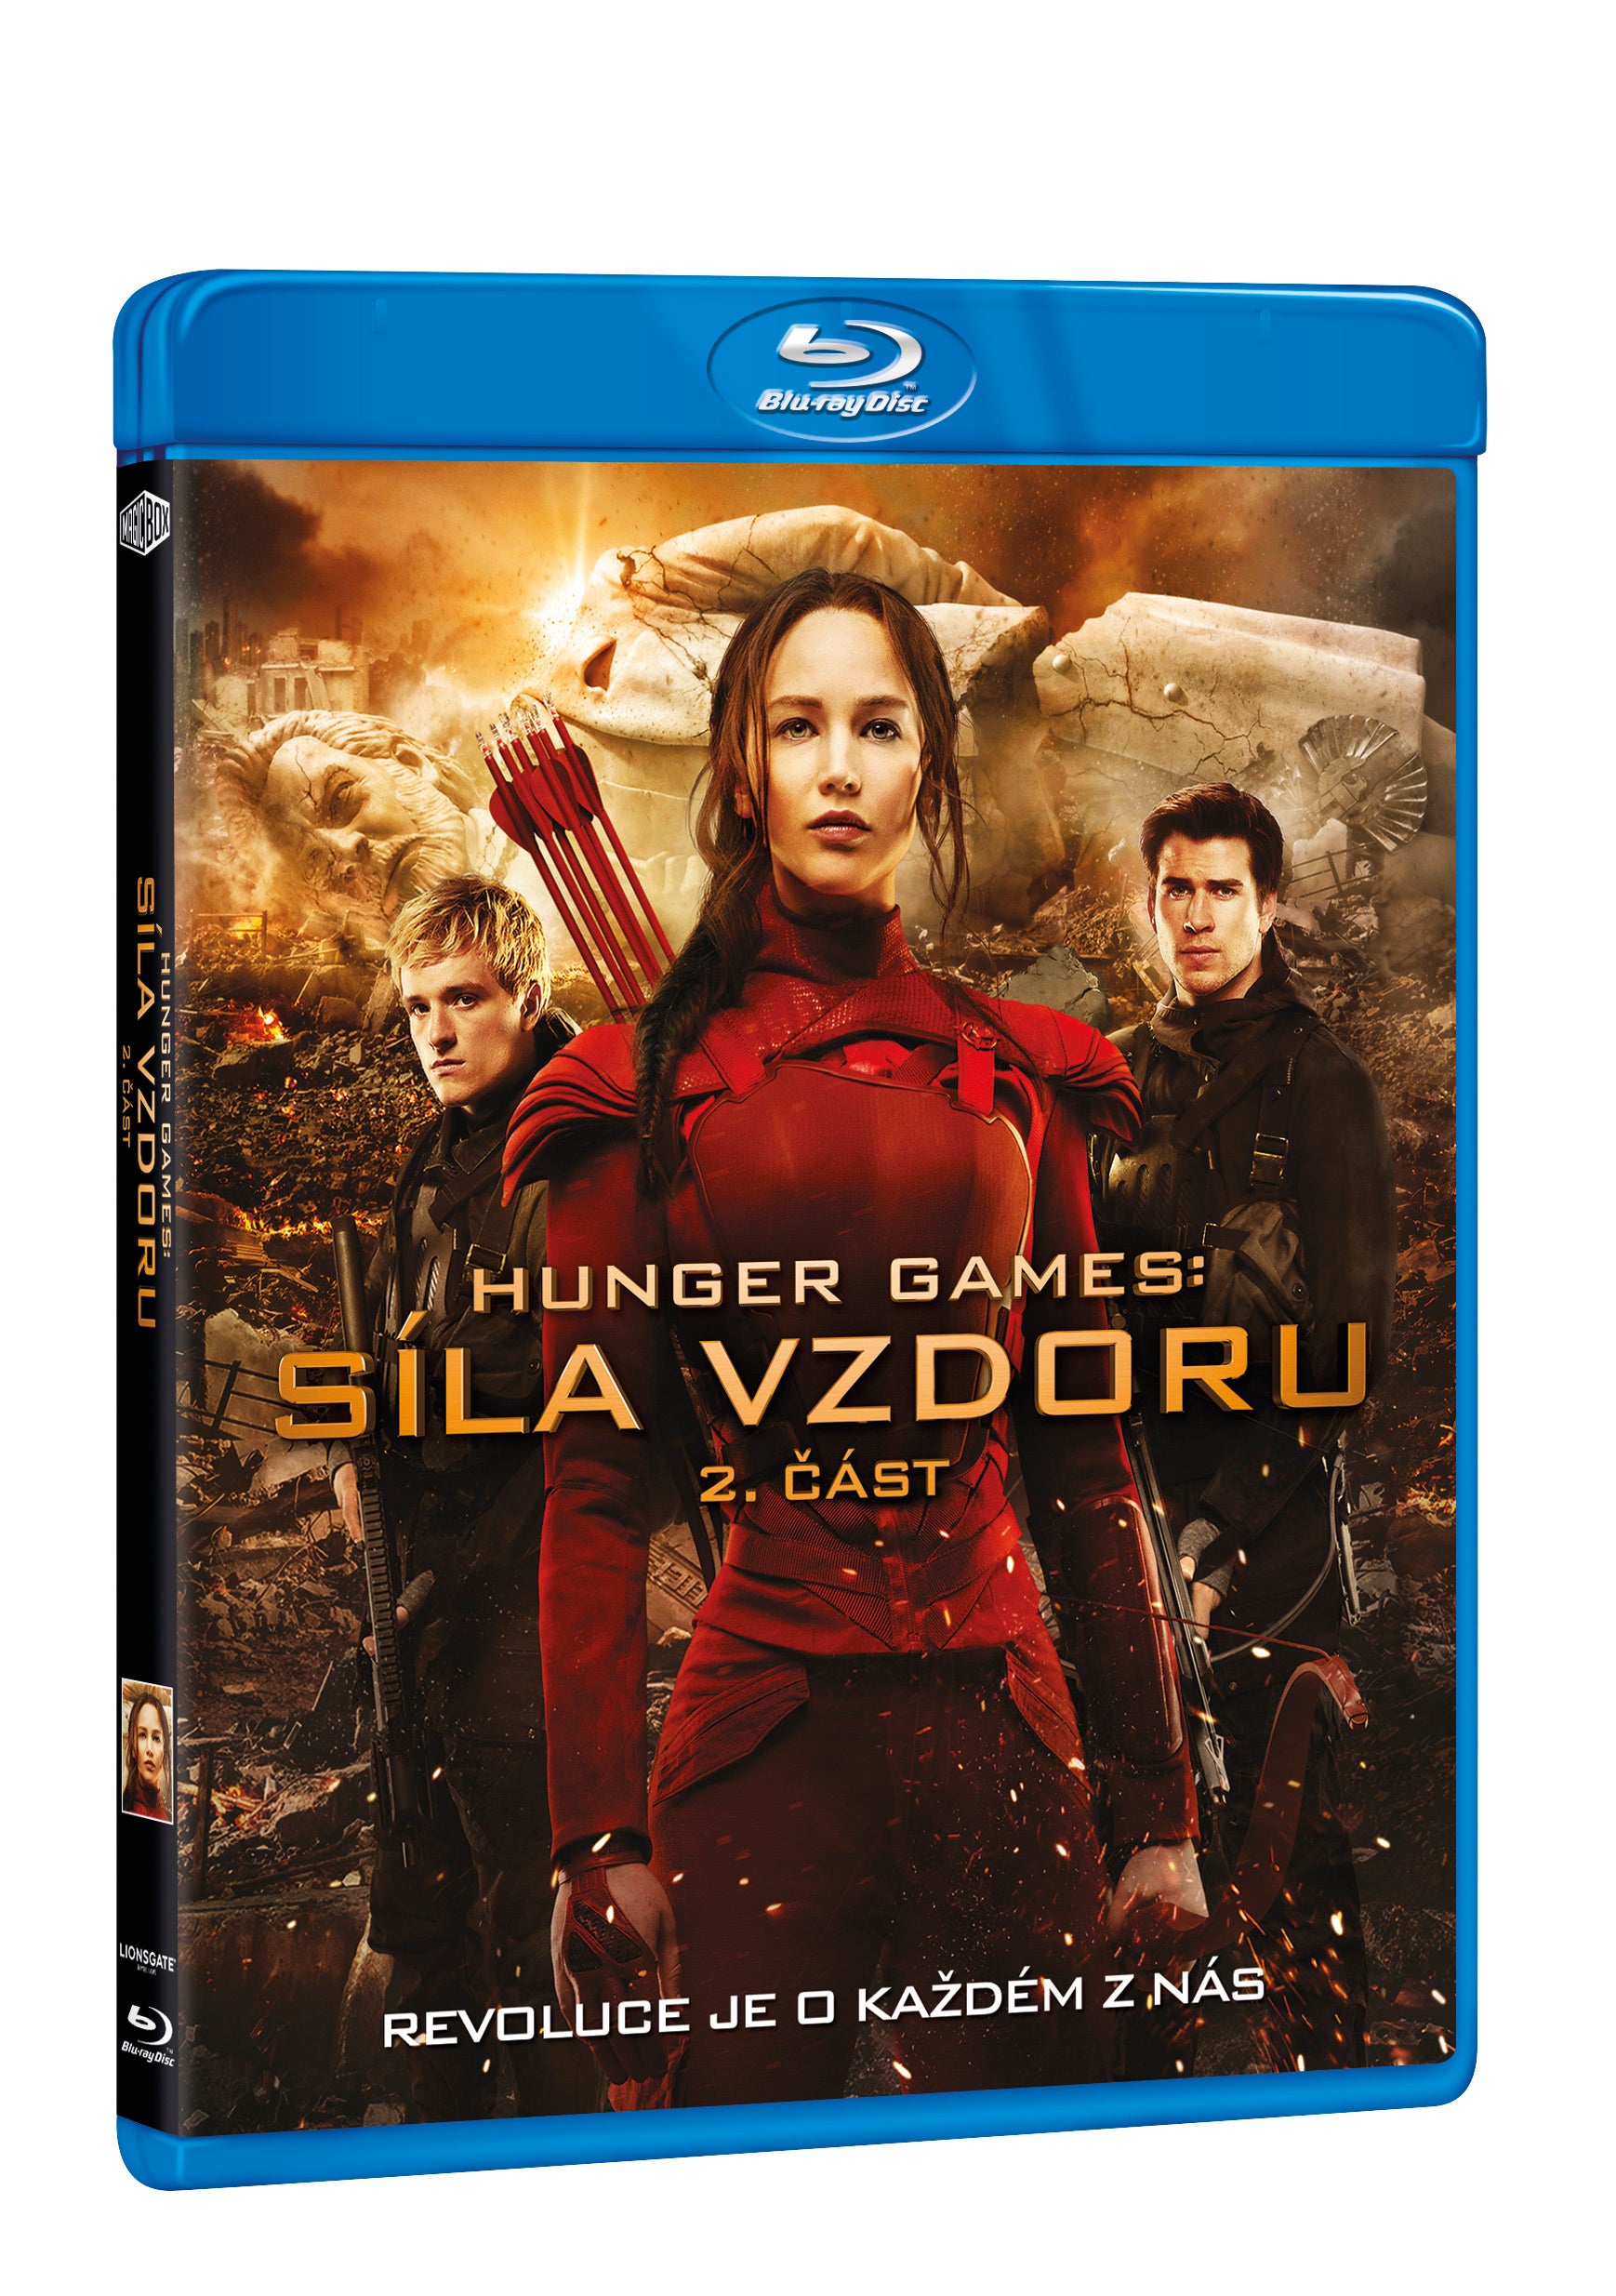 Hunger Games: Sila vzdoru 2. cast BD / The Hunger Games: Mockingjay - Part 2 - Czech version